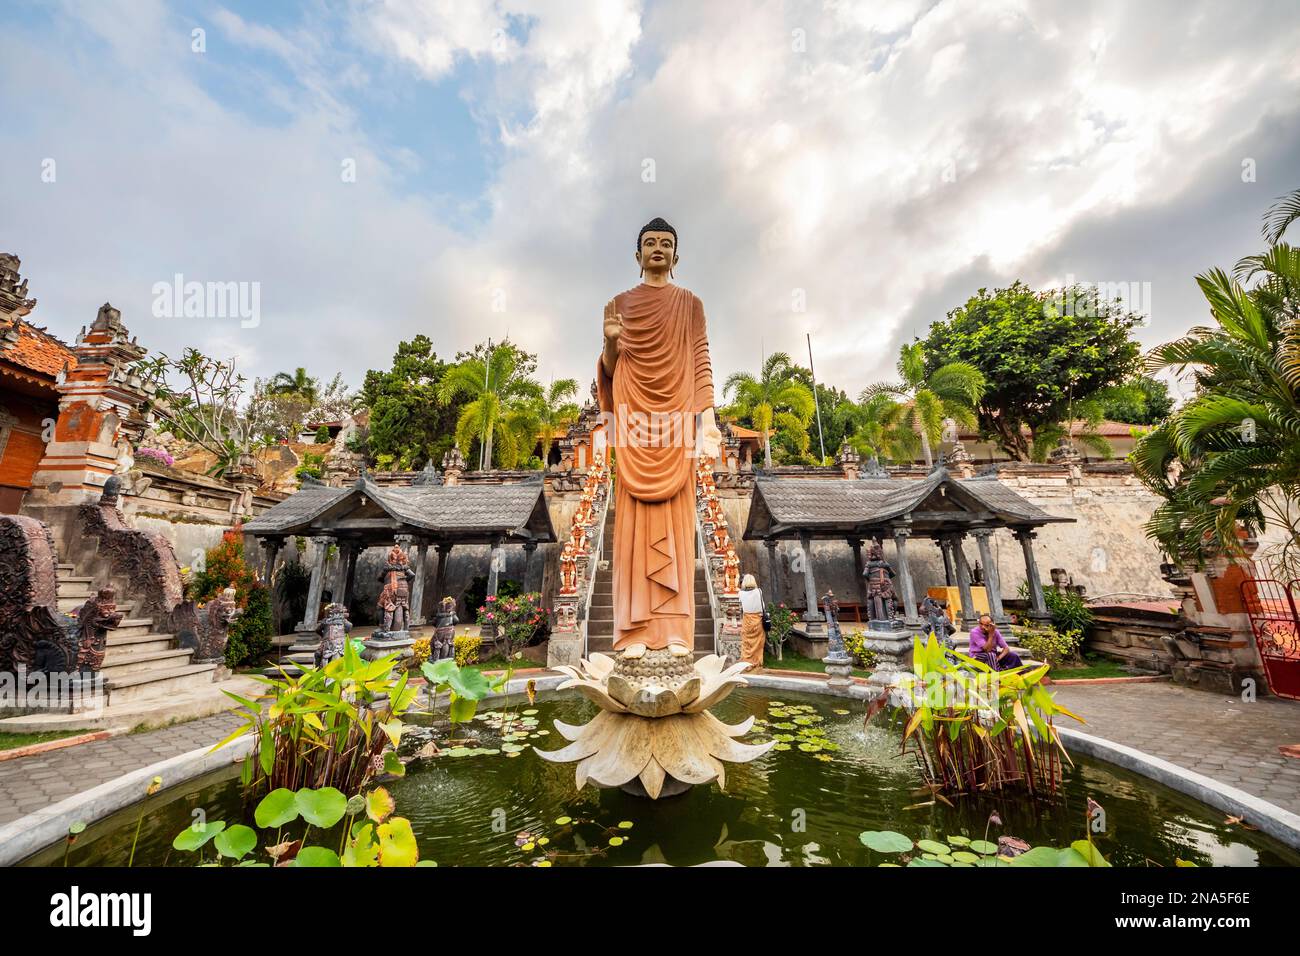 Statue of Buddha at Brahma Vihara Arama Buddhist Monastery; Banjar, Bali, Indonesia Stock Photo